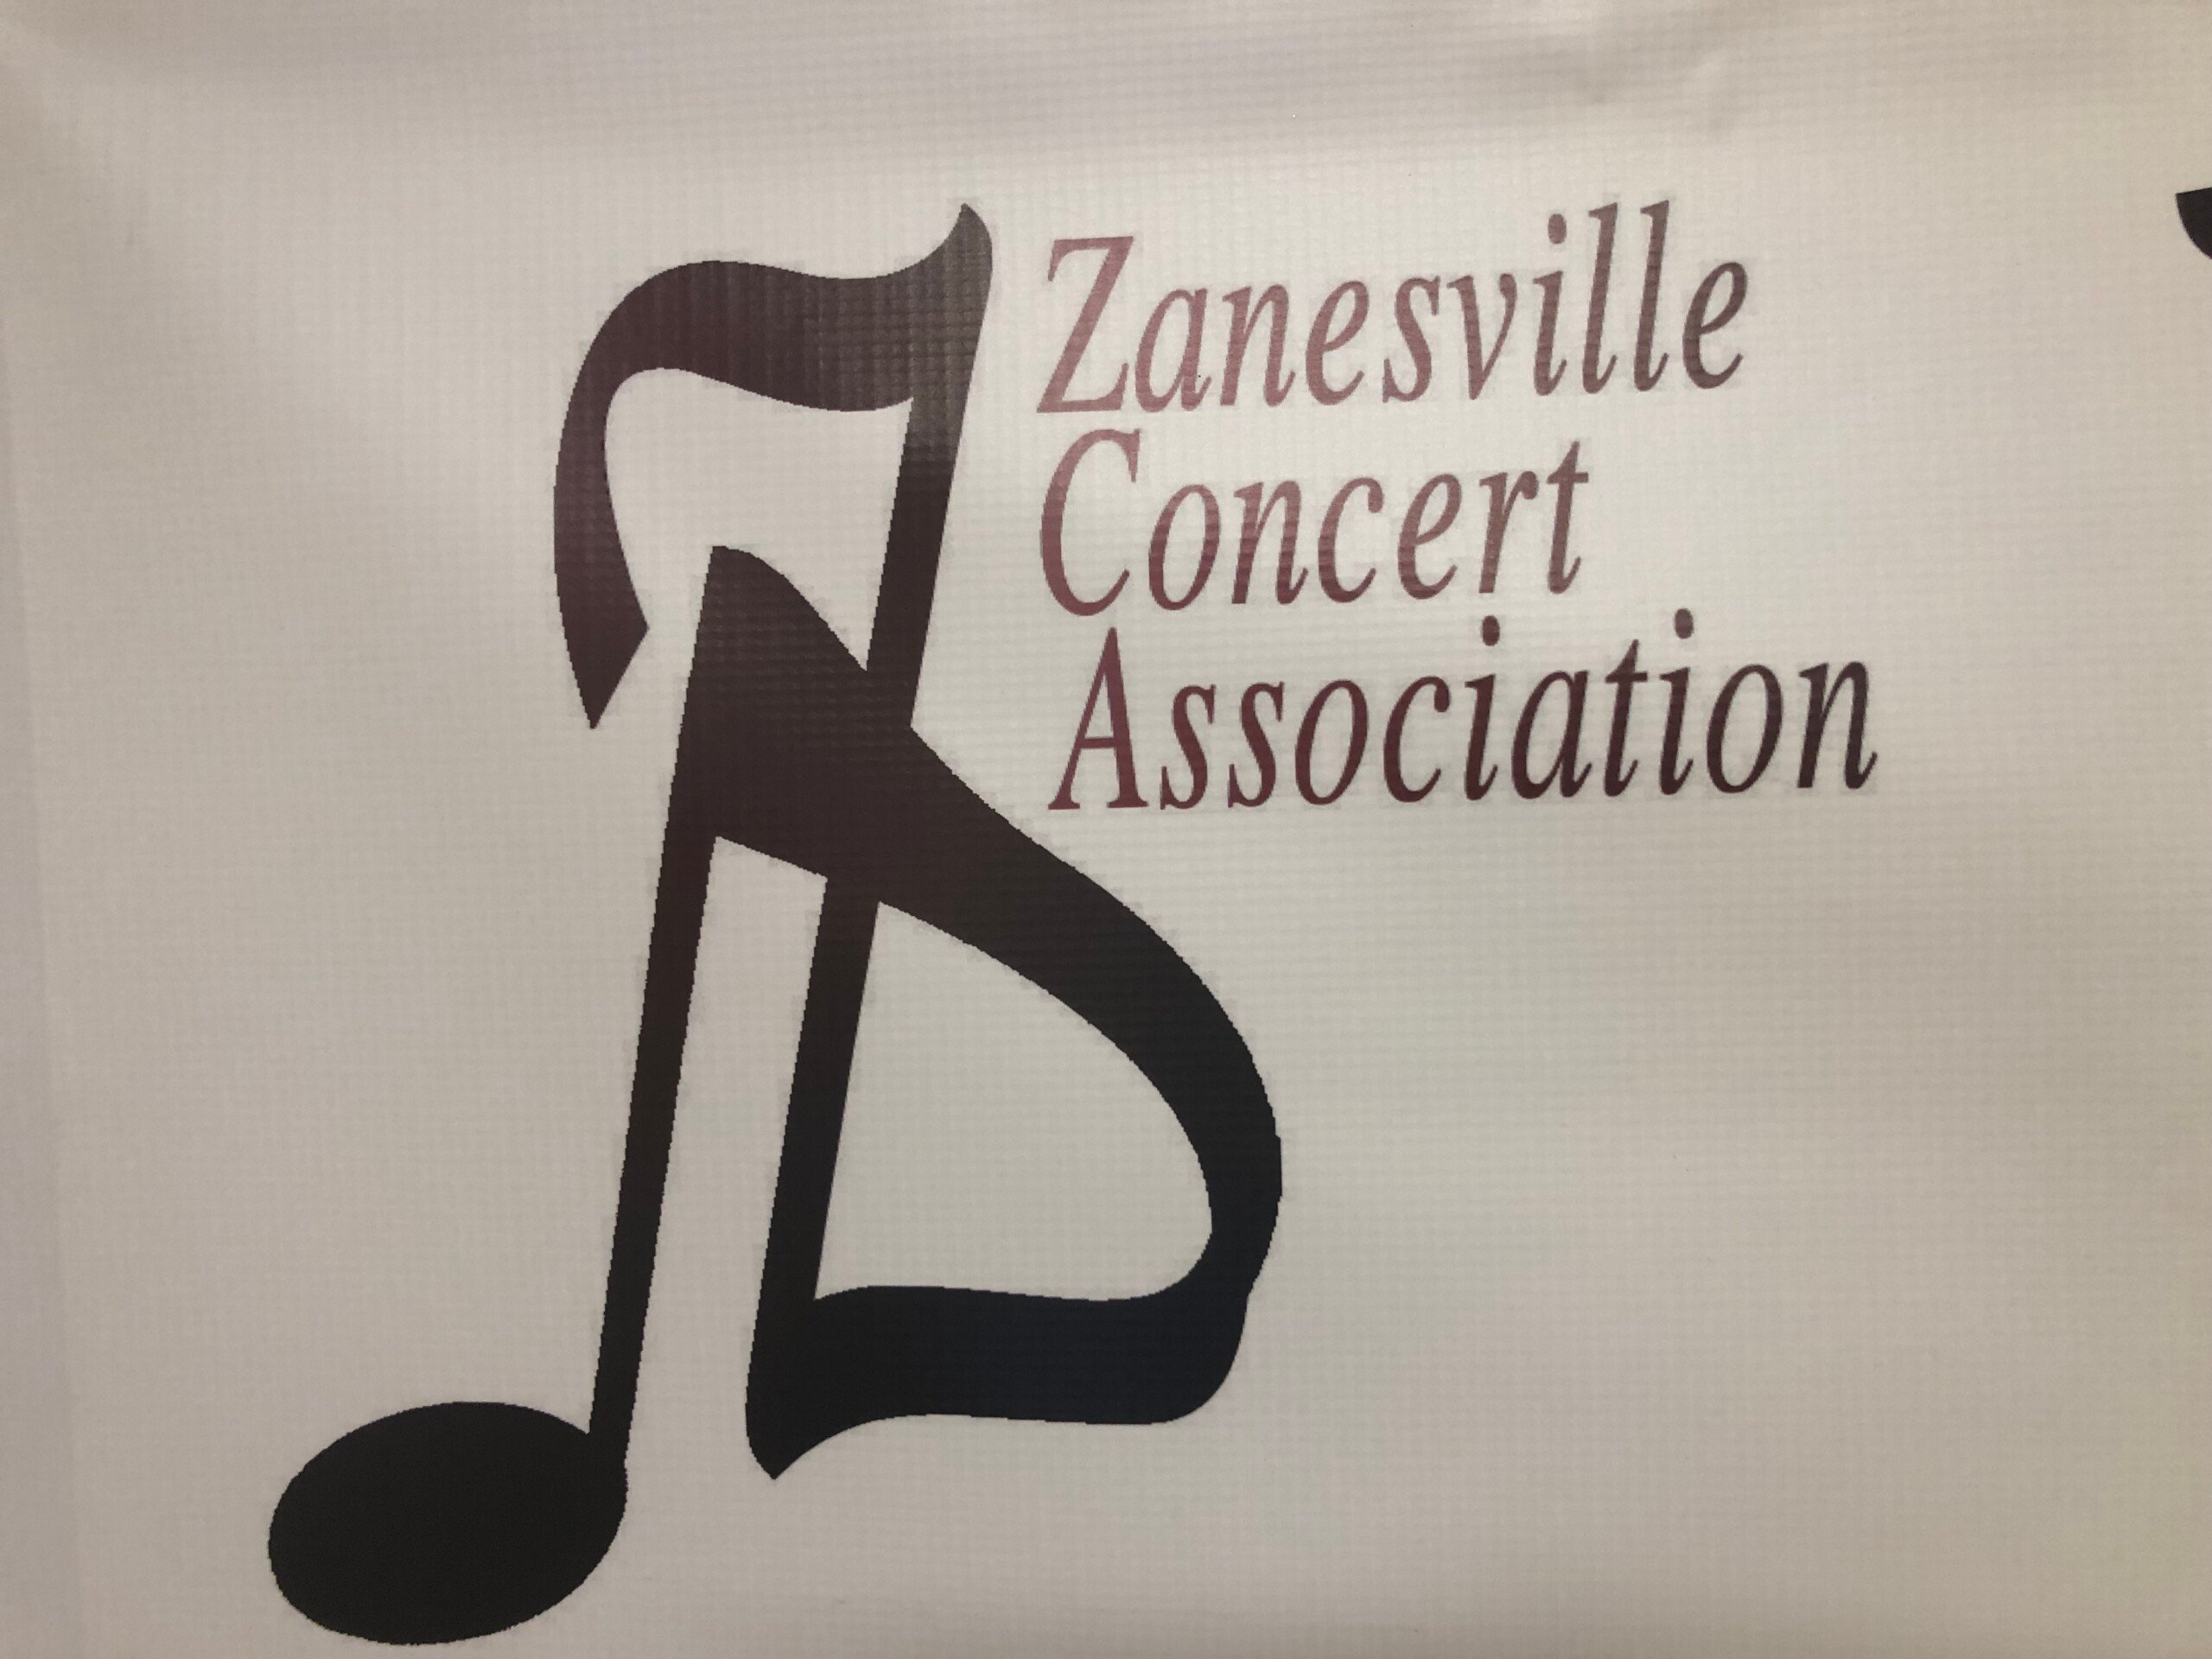 Zanesville Concert Association Cancels Concert Tonight at Secrest